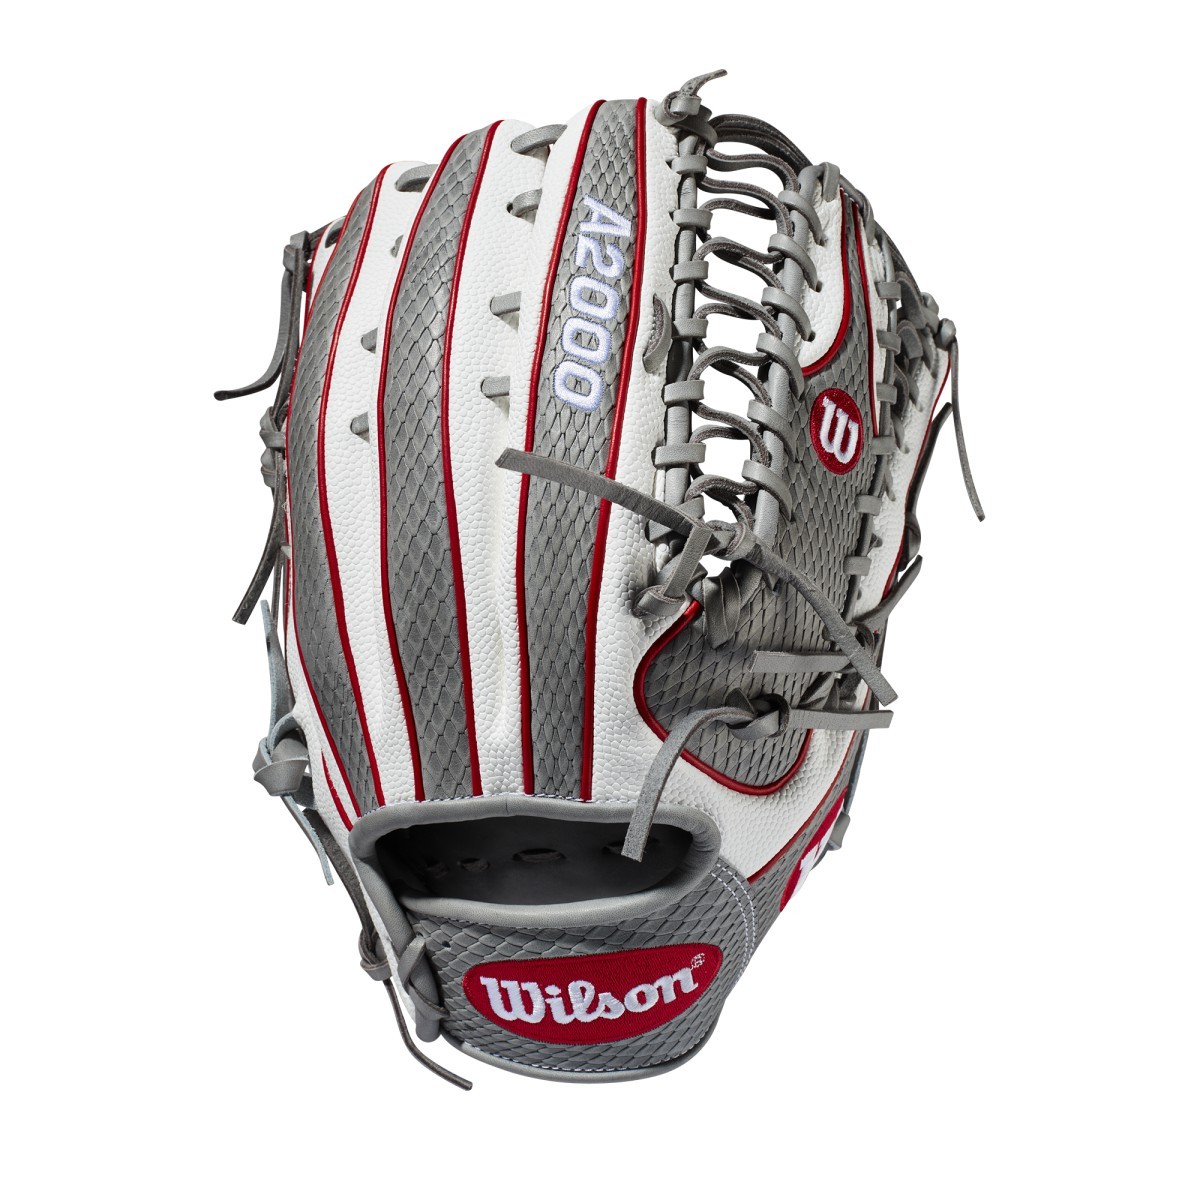 Wilson A2000 Baseball Glove 12.75 March 2019 GOTM OT6SS Right Hand Throw